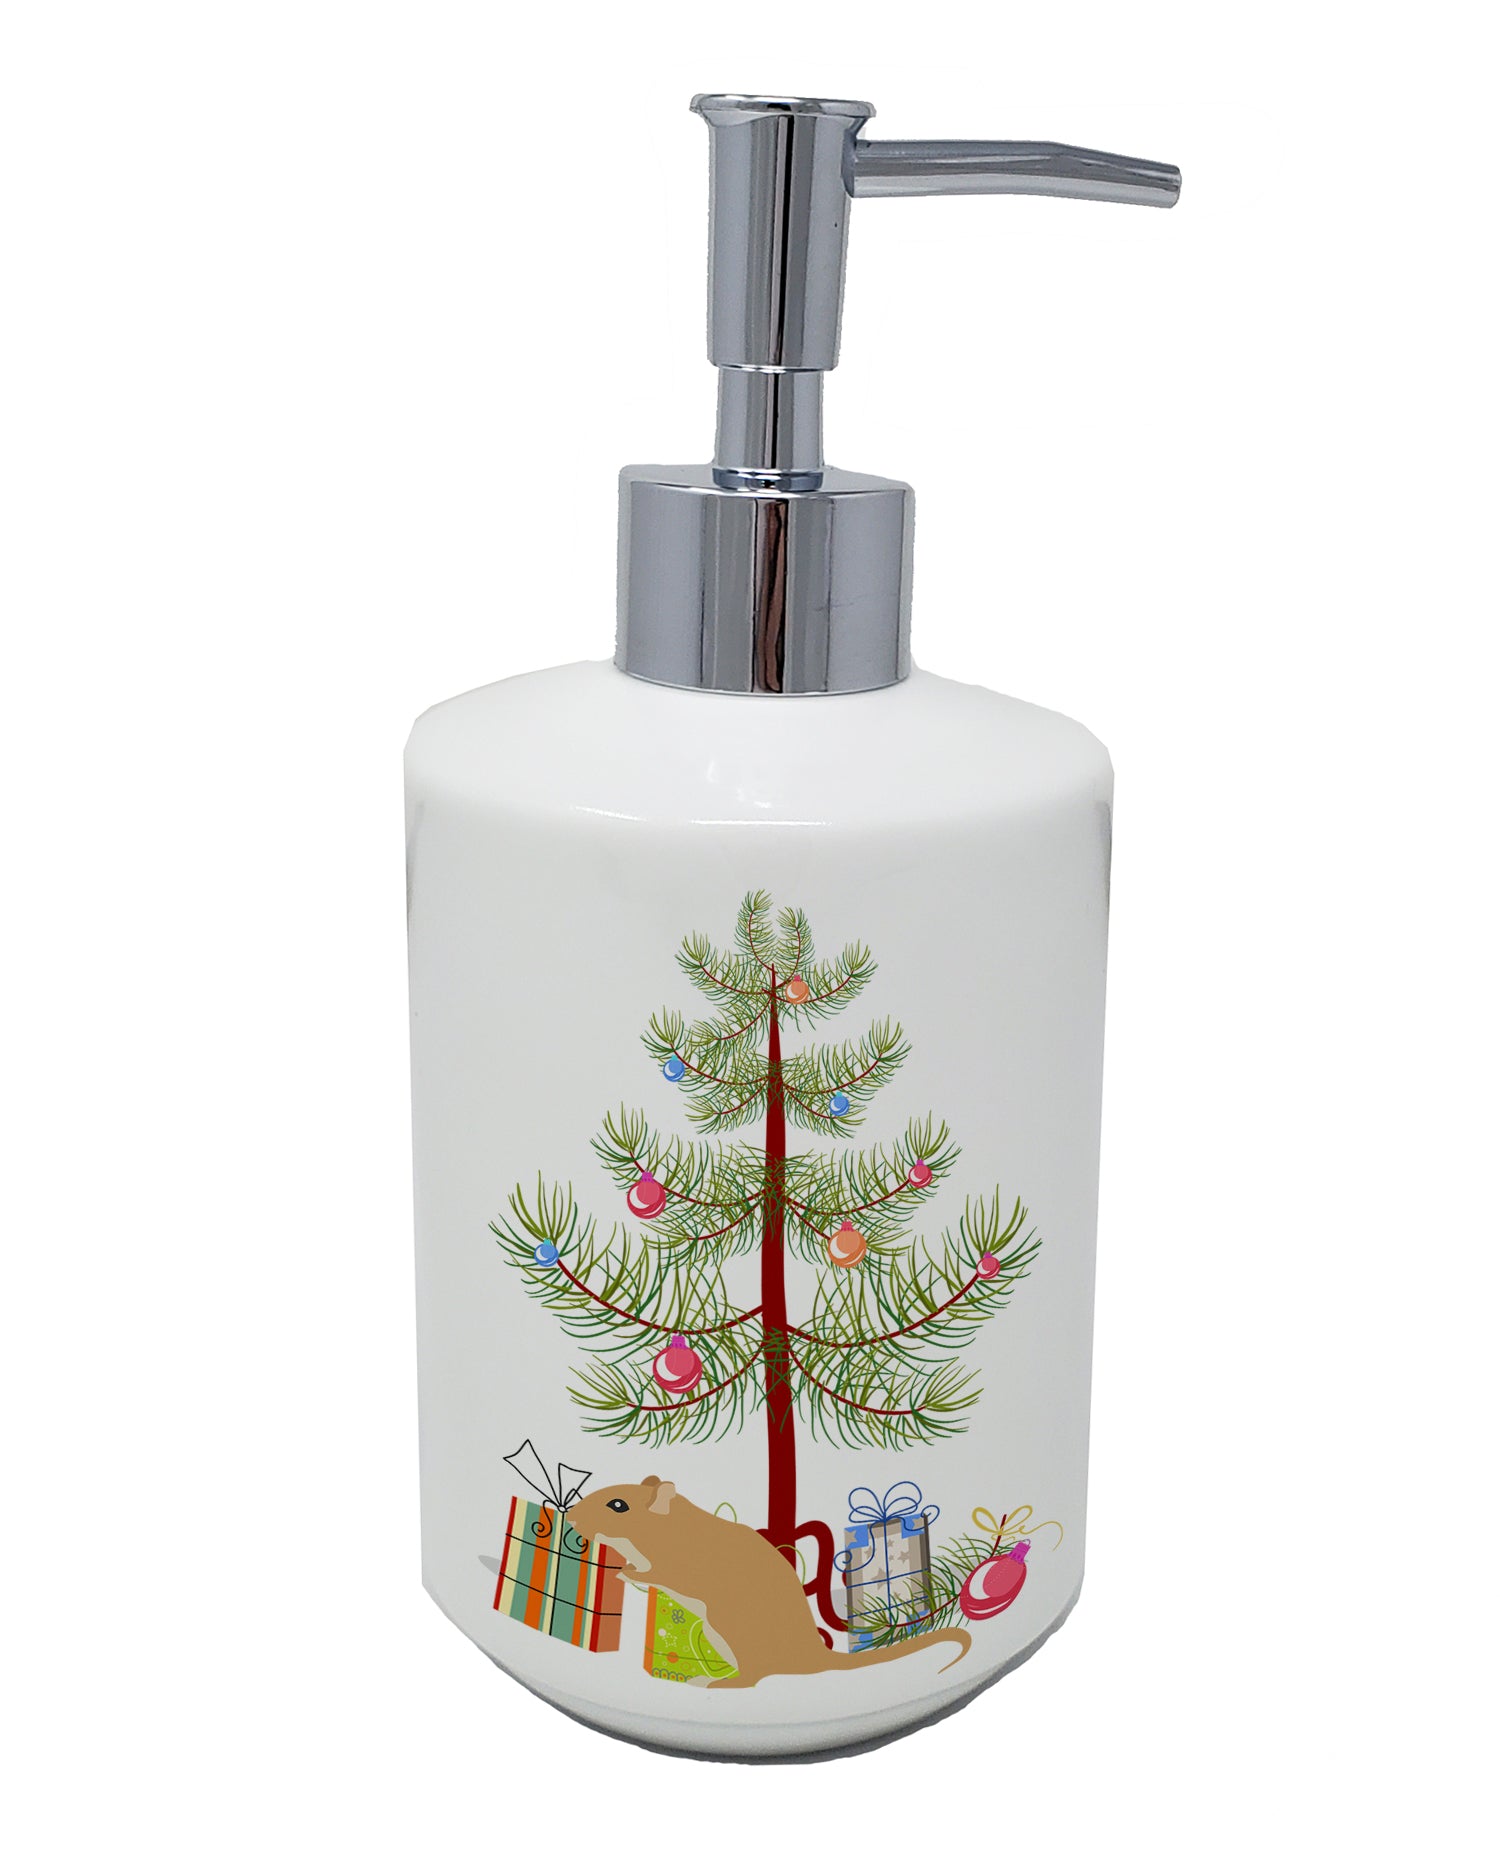 Buy this Gerbil Mouse Merry Christmas Ceramic Soap Dispenser